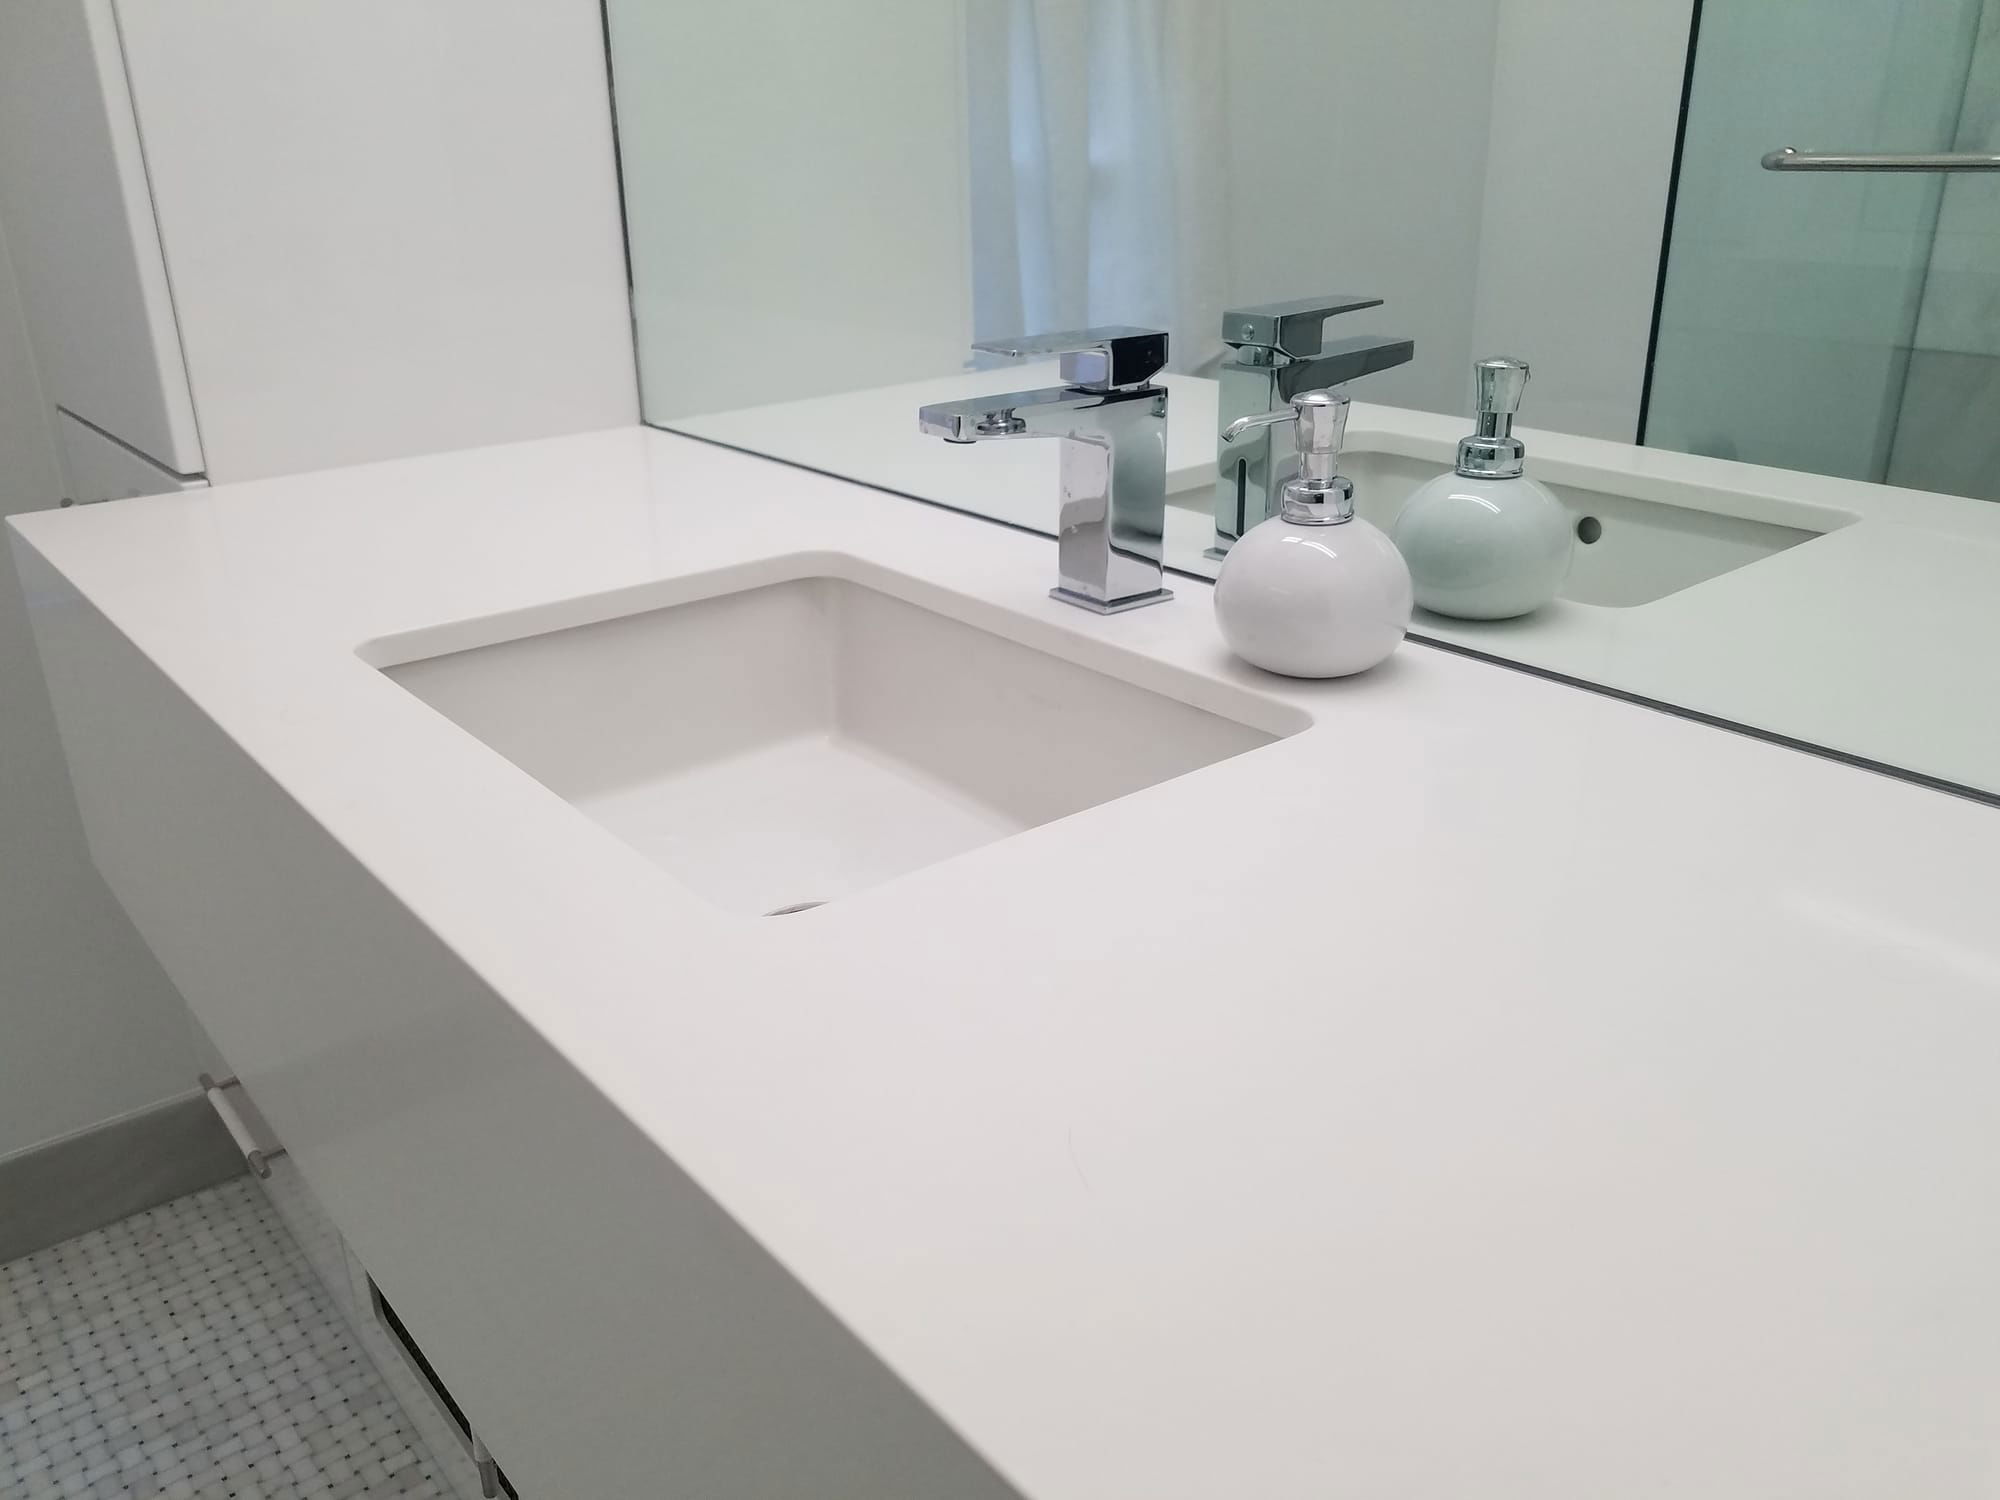 Popular Bathroom - Mark S. 1/2019 90068 - LA